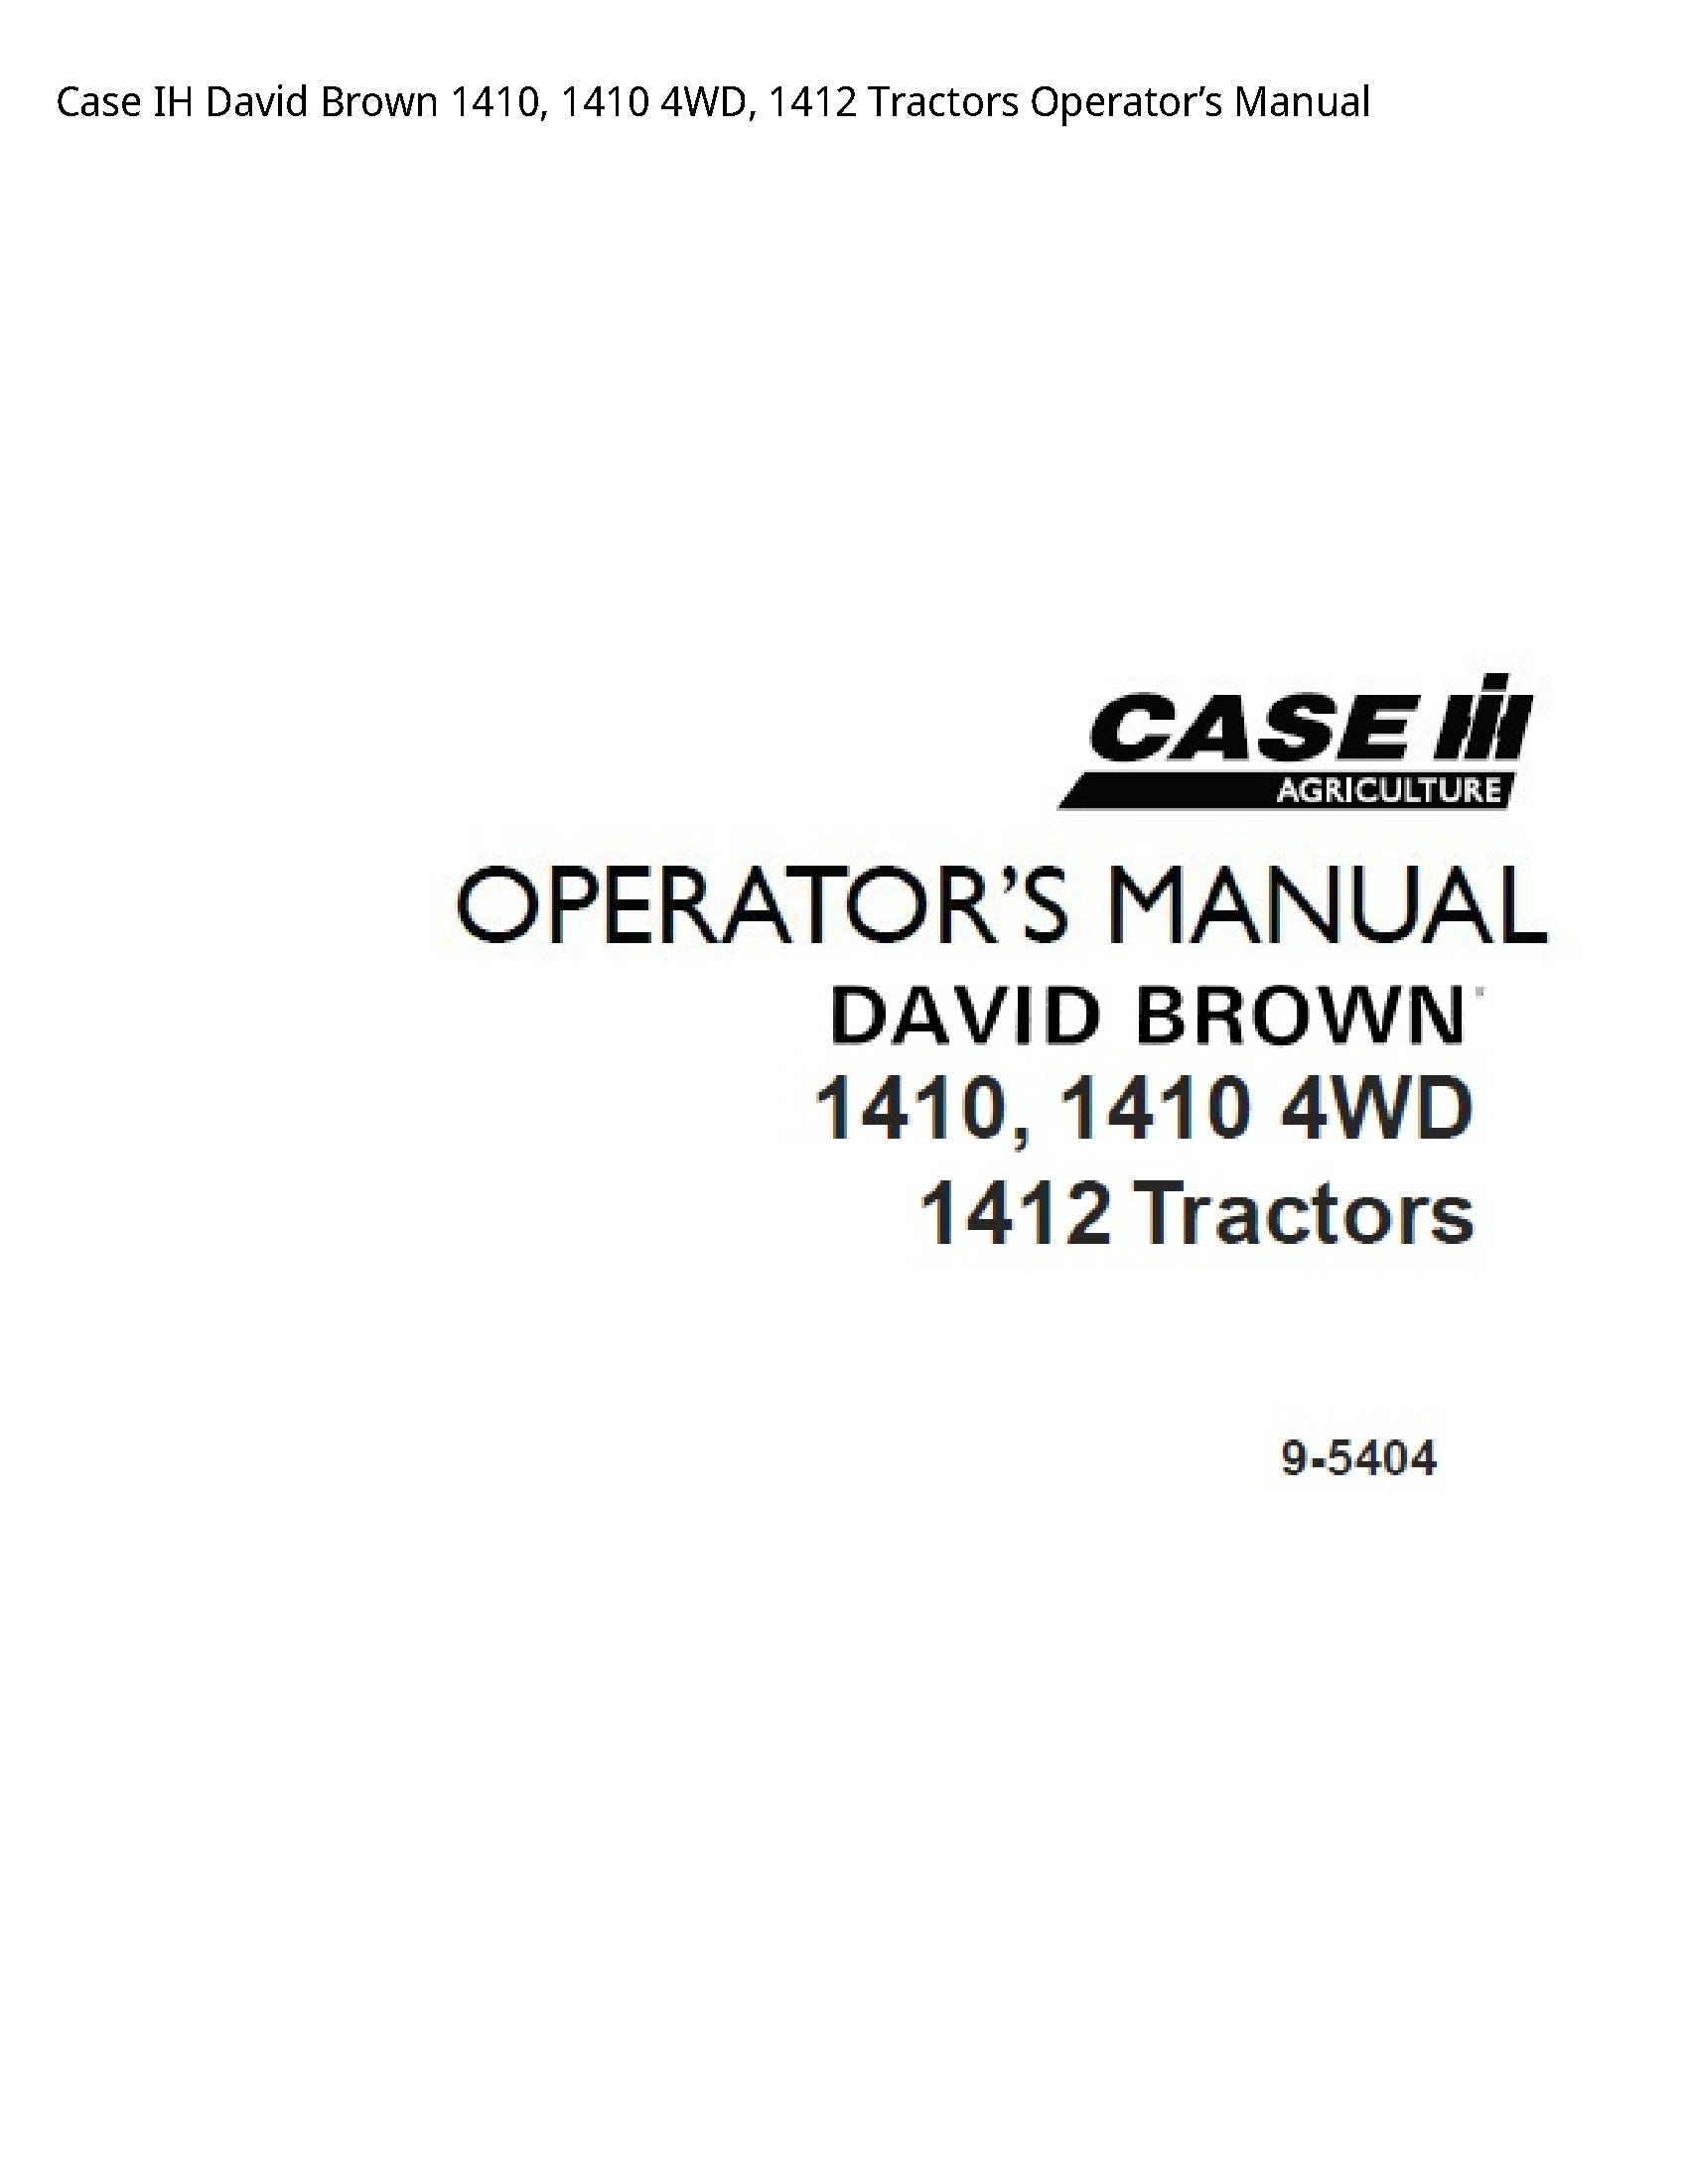 Case/Case IH 1410 IH David Brown Tractors Operator’s manual